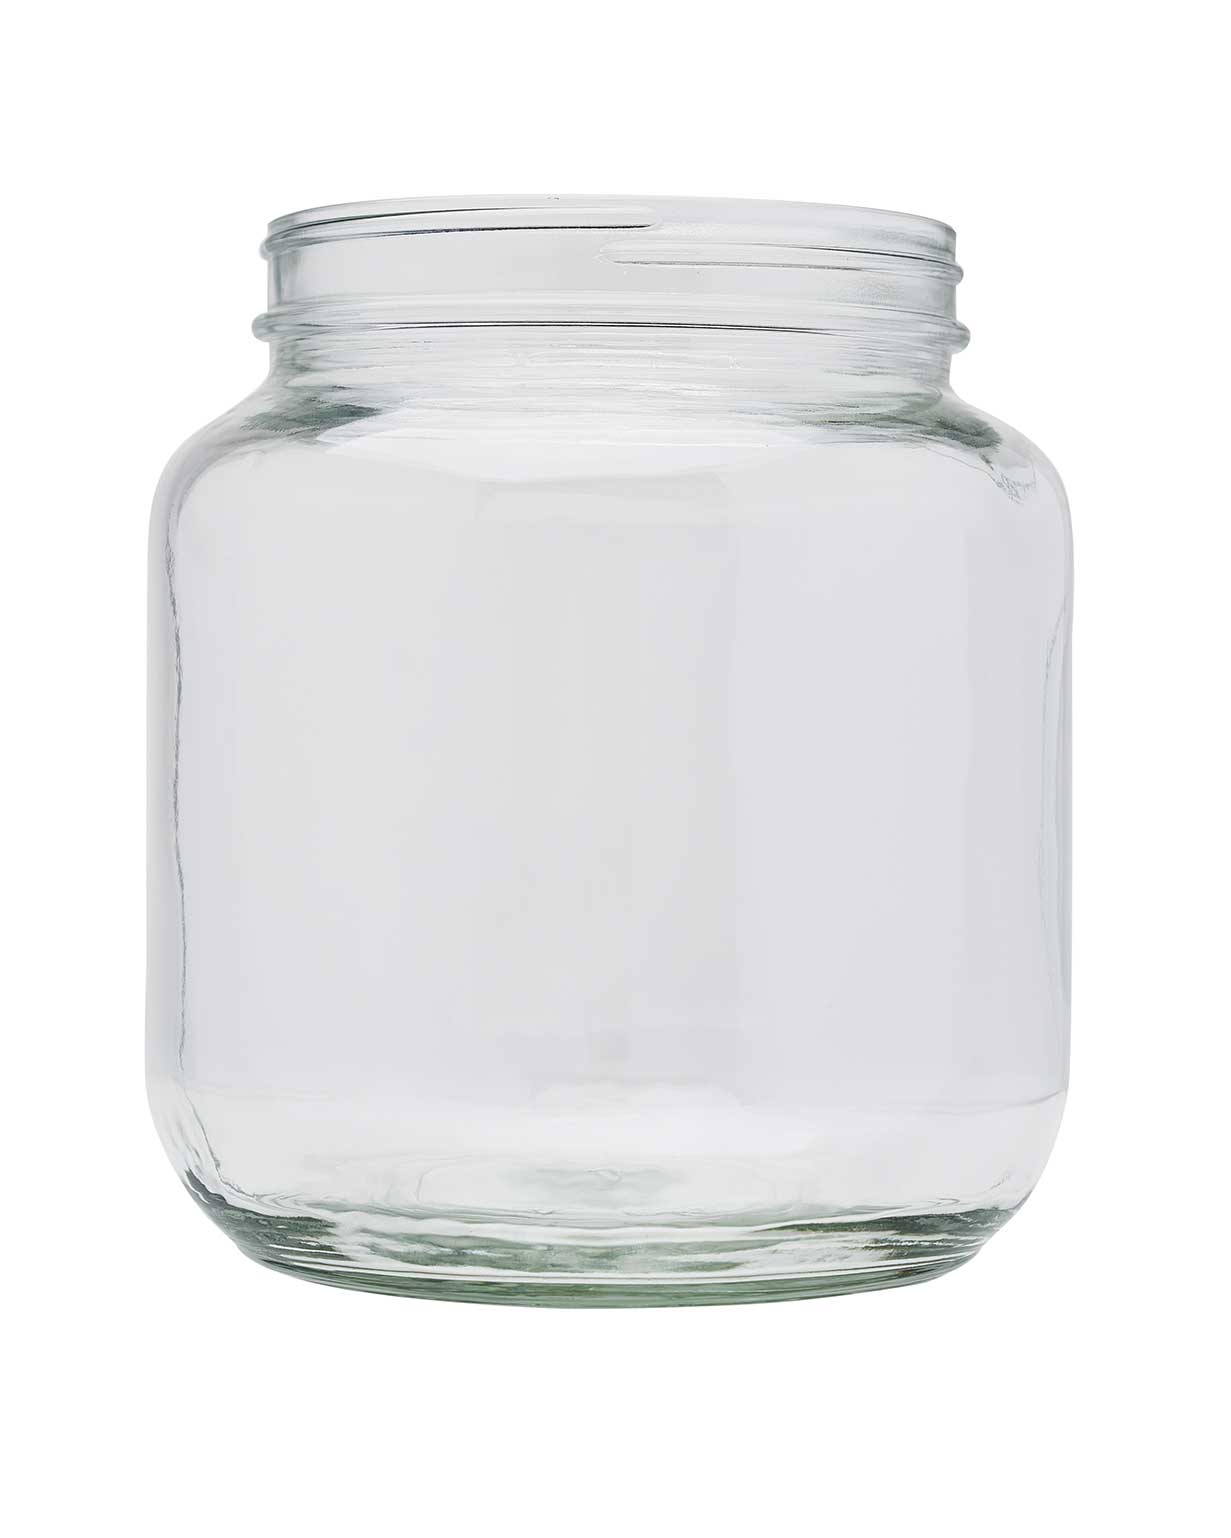 0.5 gl glass flint wide mouth jar 110-400